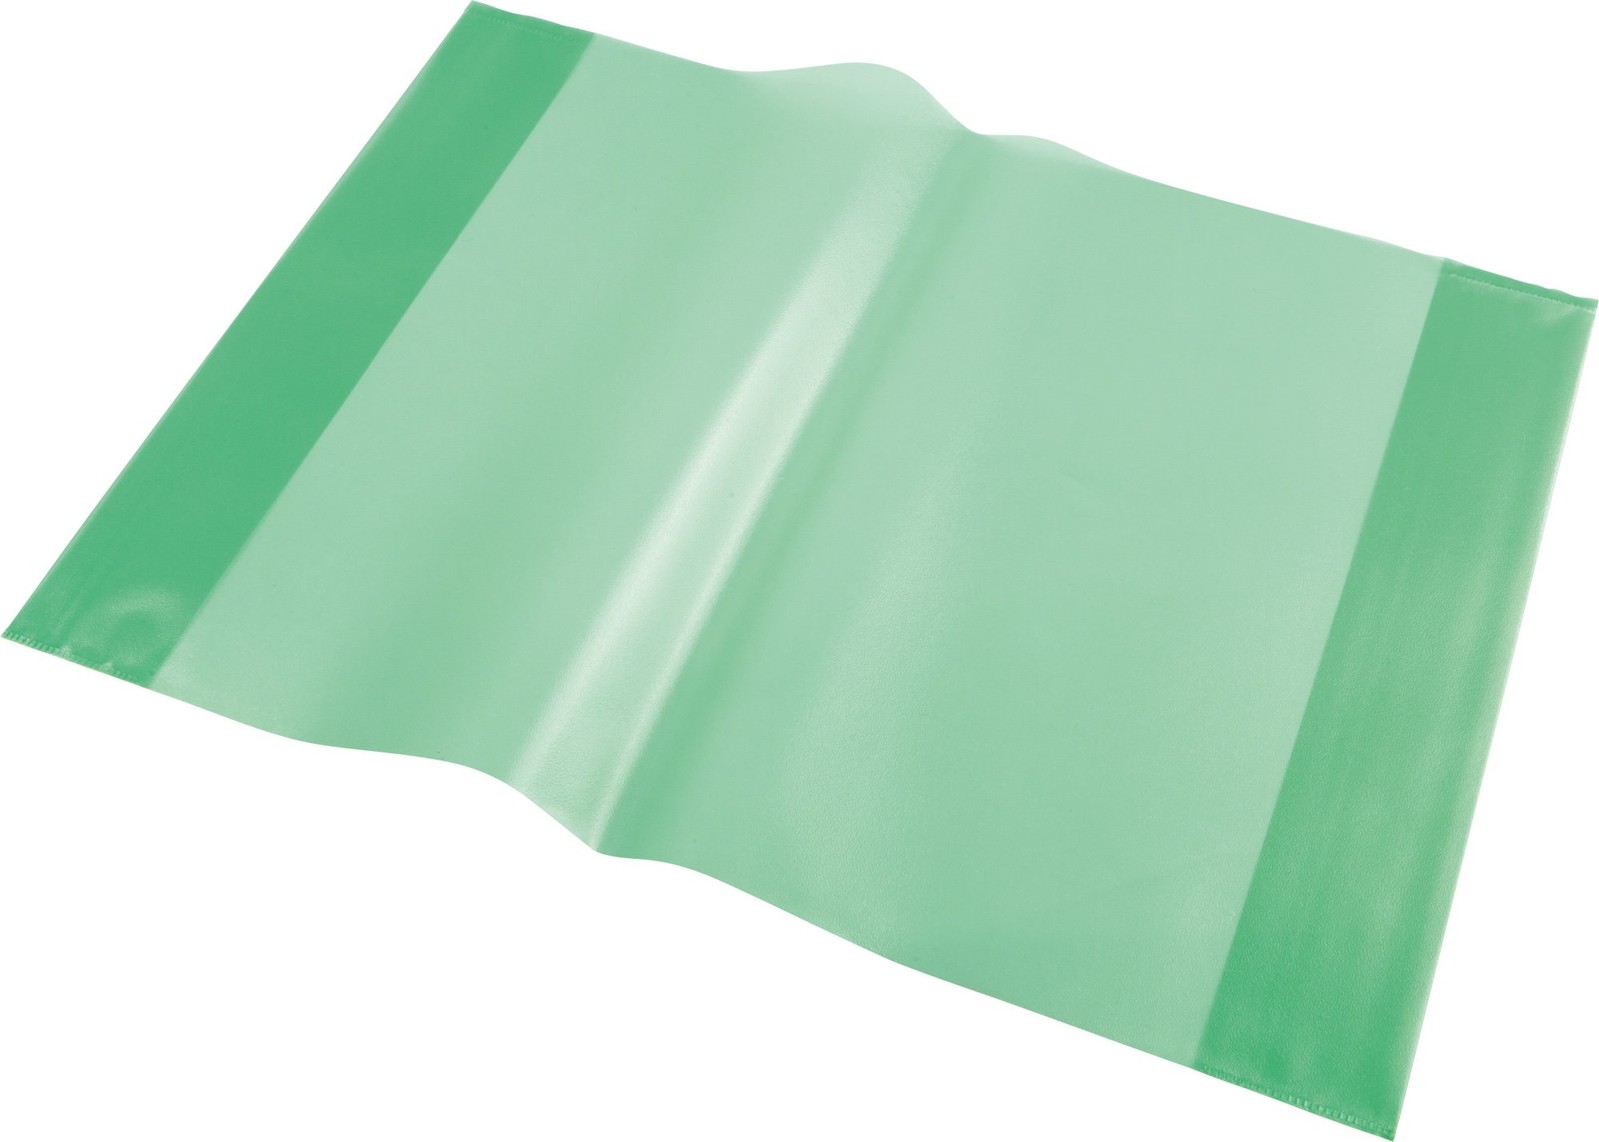 Panta plast Obaly na sešity A4 PP 0,8 OE x 10 ks zelené